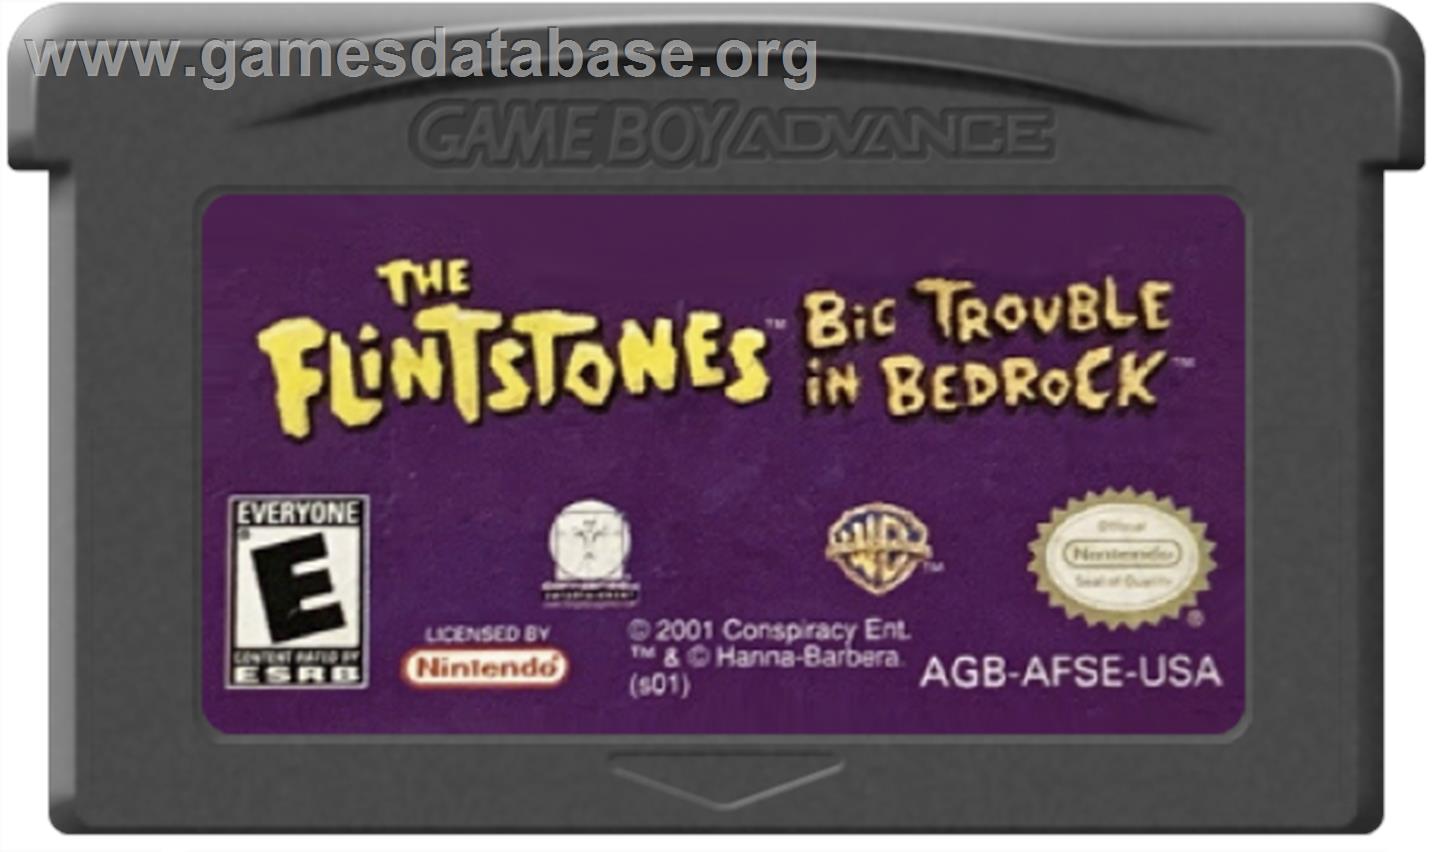 Flintstones: Big Trouble in Bedrock - Nintendo Game Boy Advance - Artwork - Cartridge